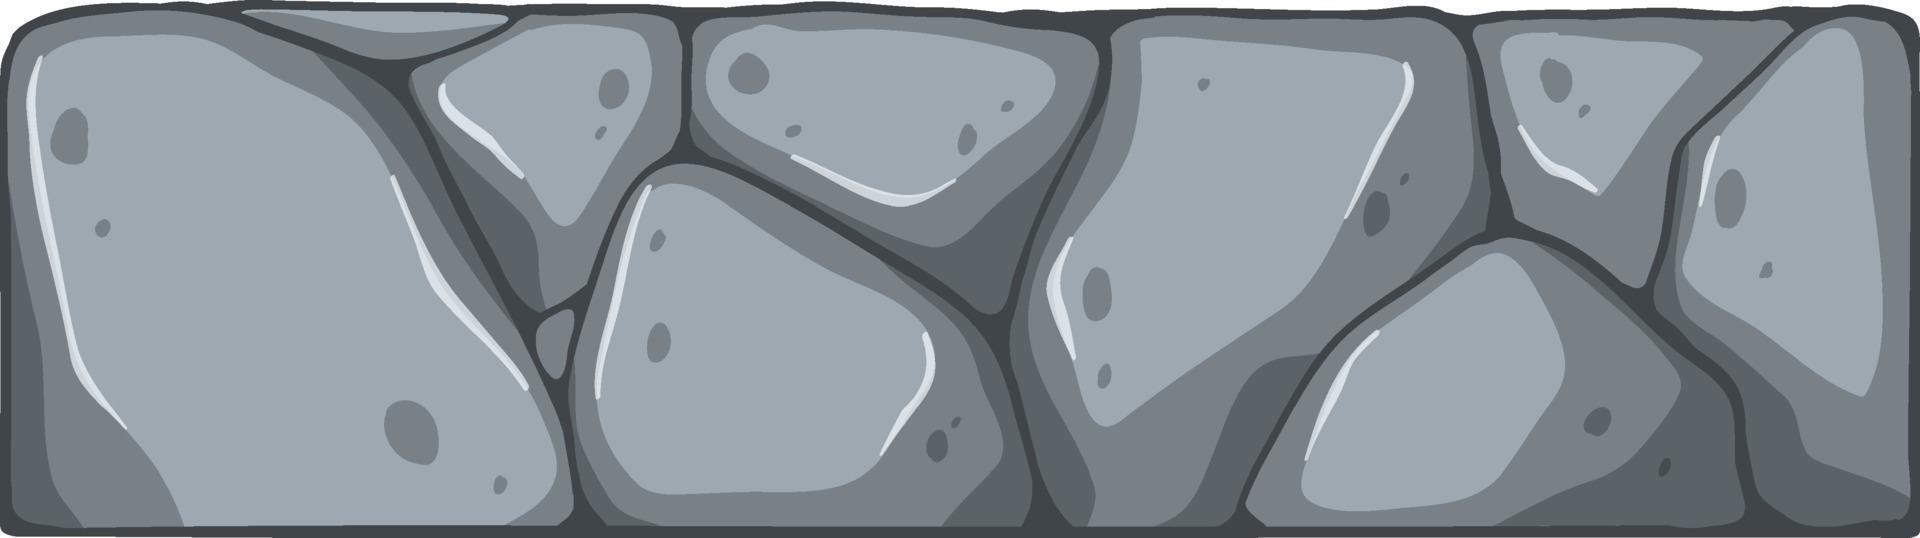 Isolated stone brick in cartoon style vector